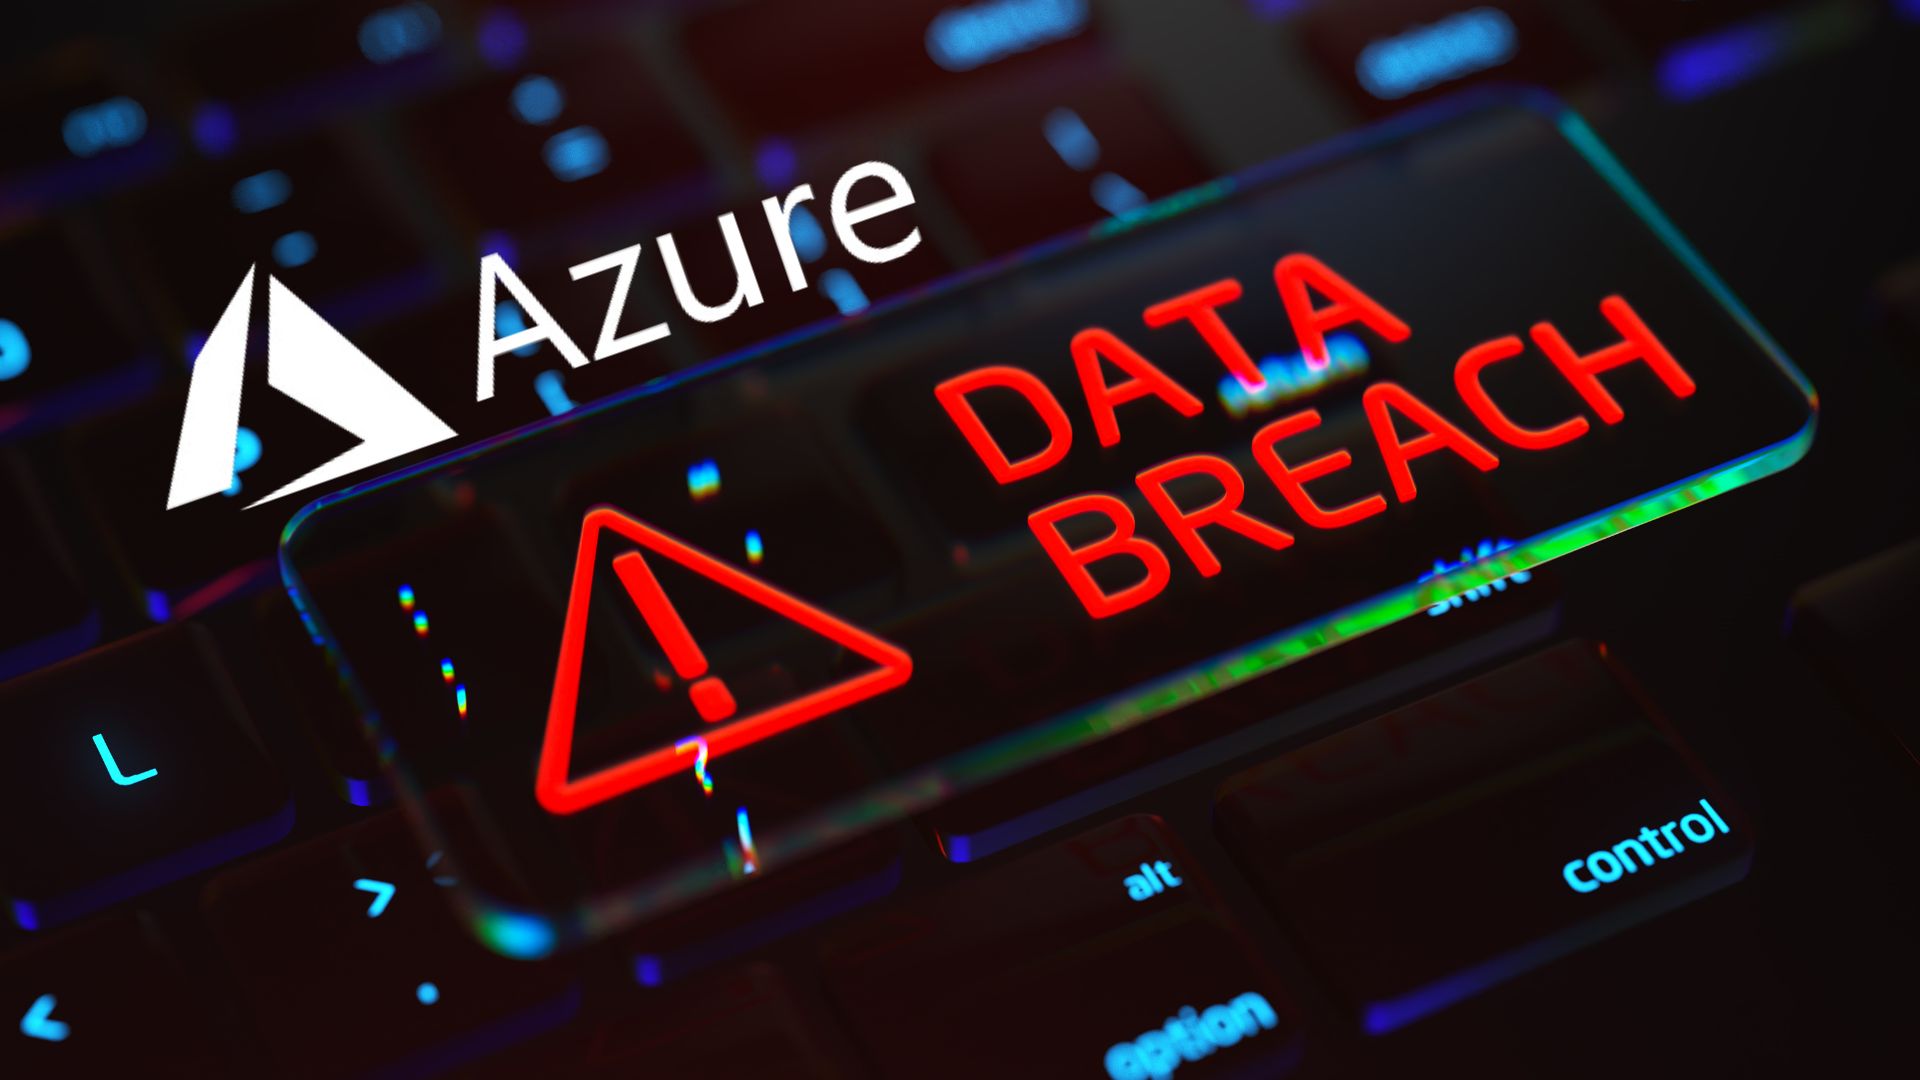 Microsoft Azure’s Biggest Security Crisis: : Massive Data Breach Puts Executive Accounts at Risk